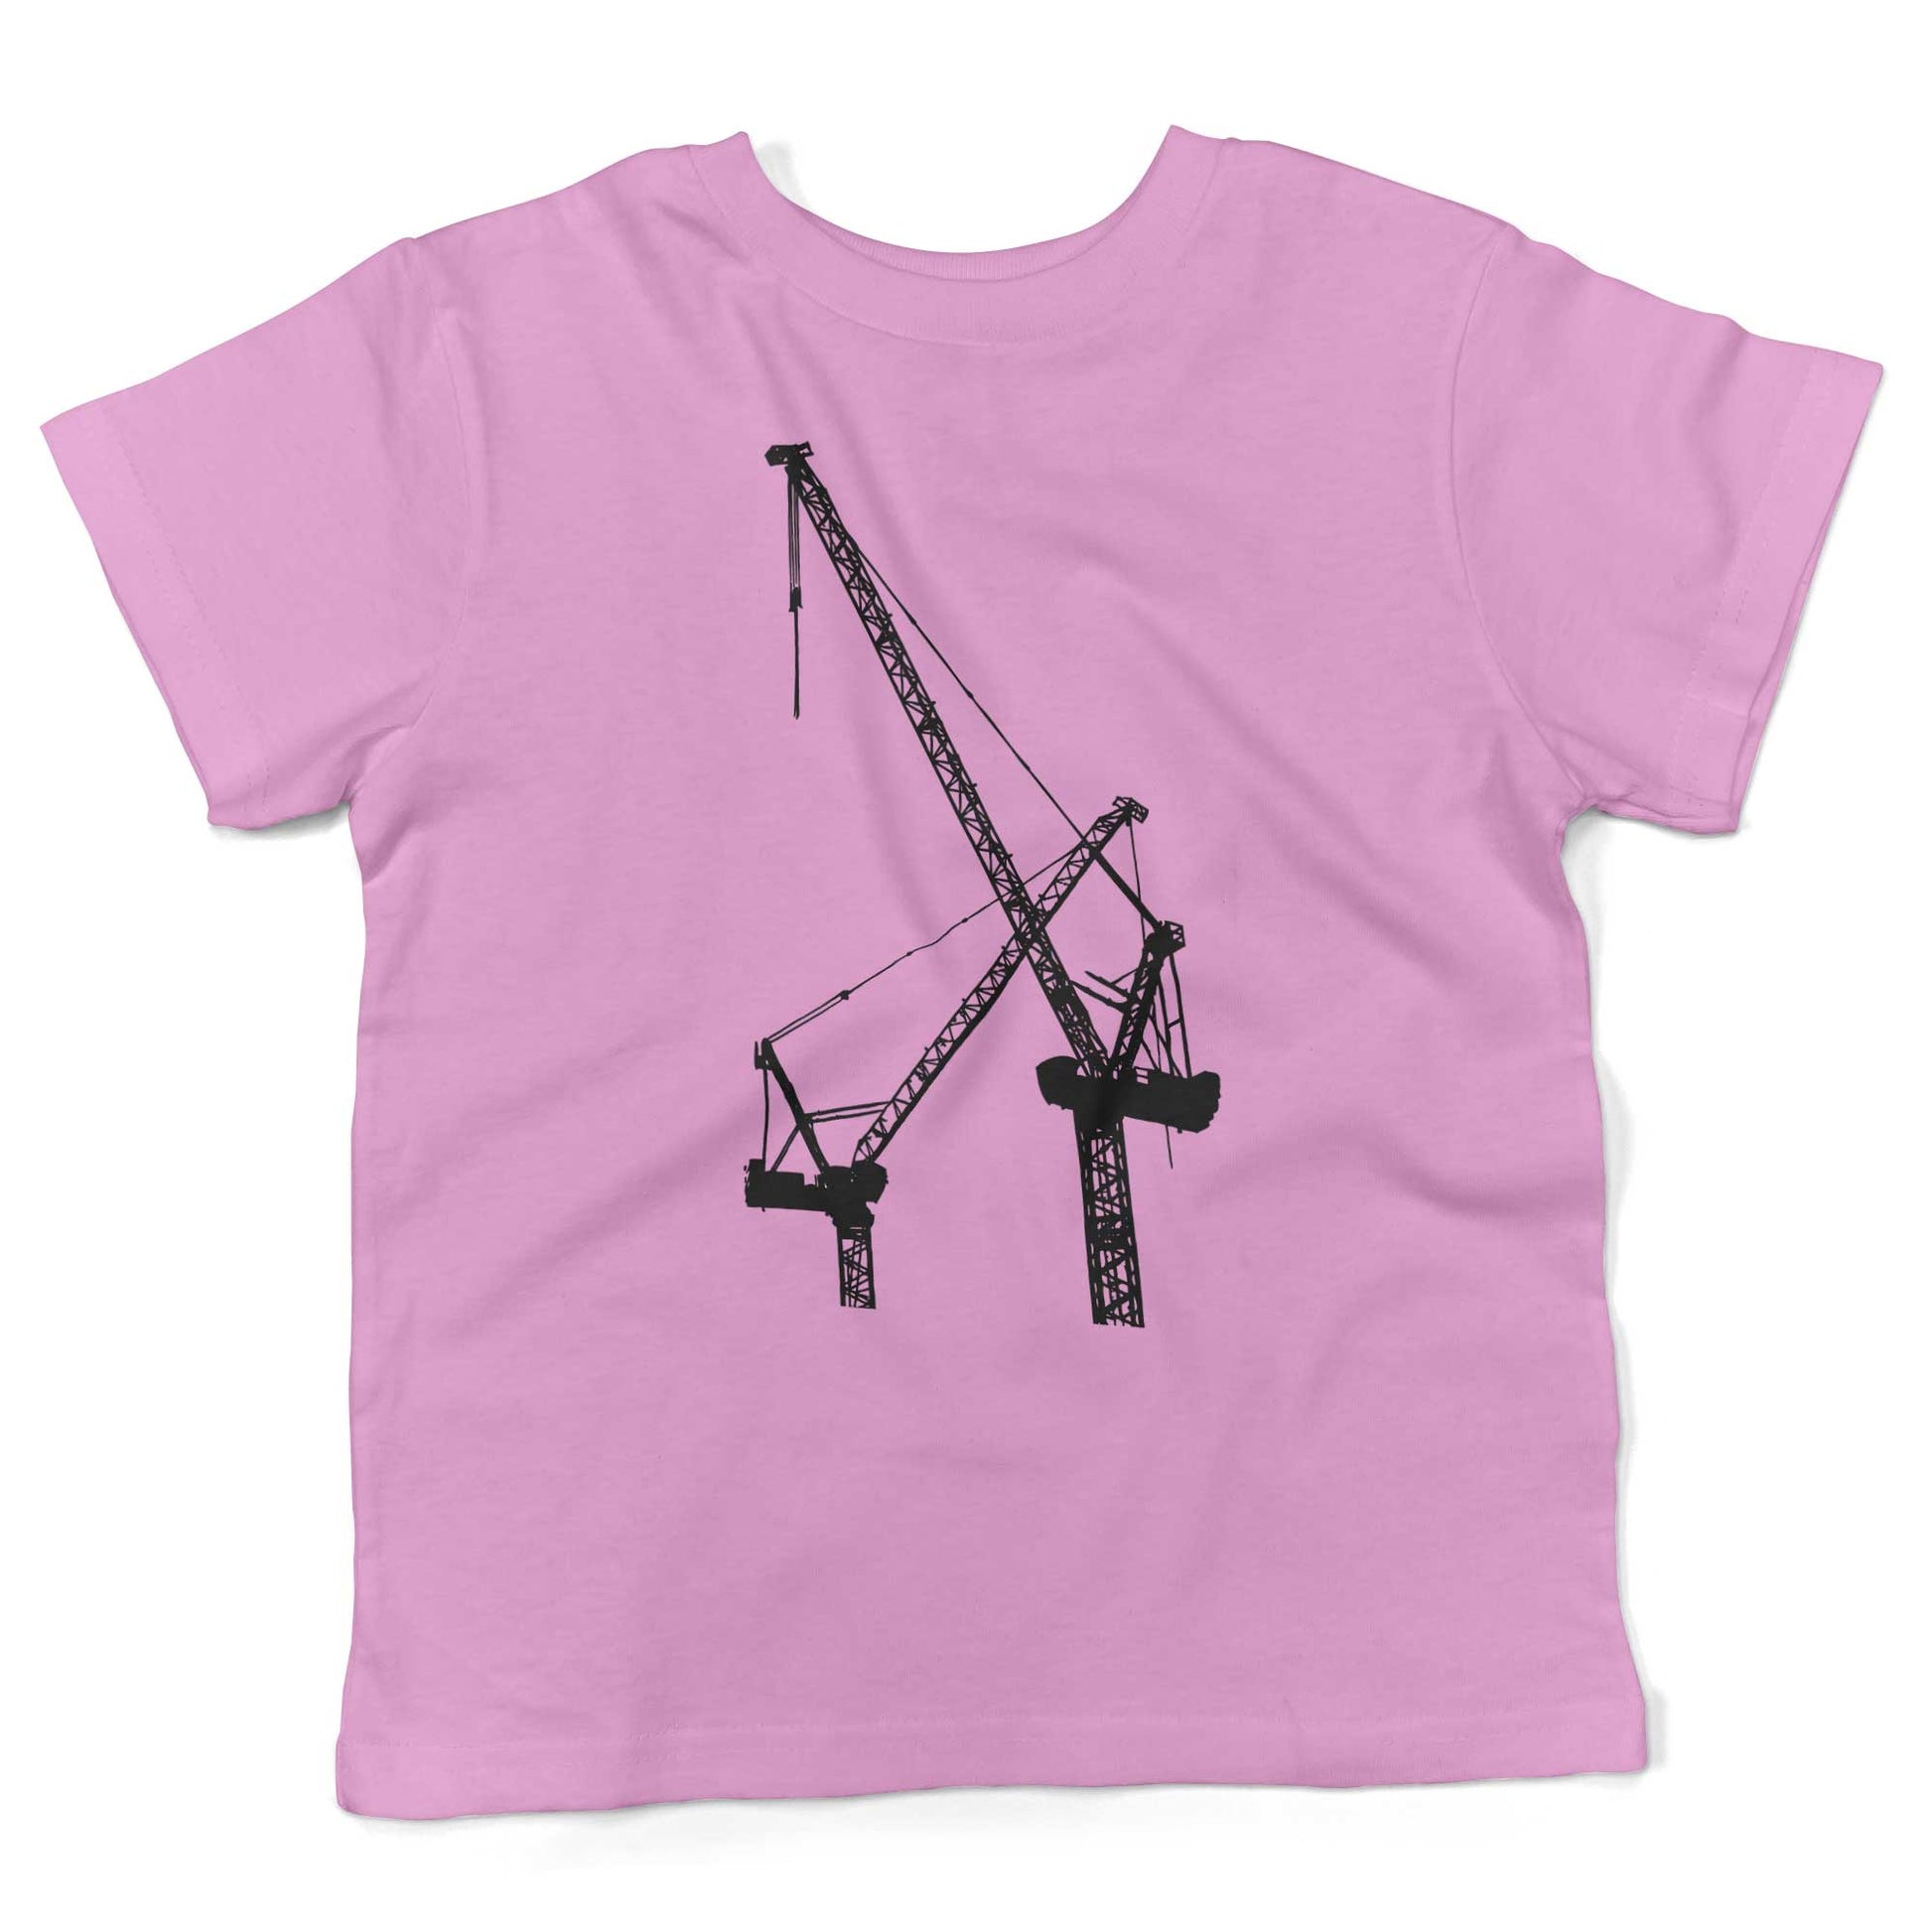 Construction Cranes Toddler Shirt-Organic Pink-2T